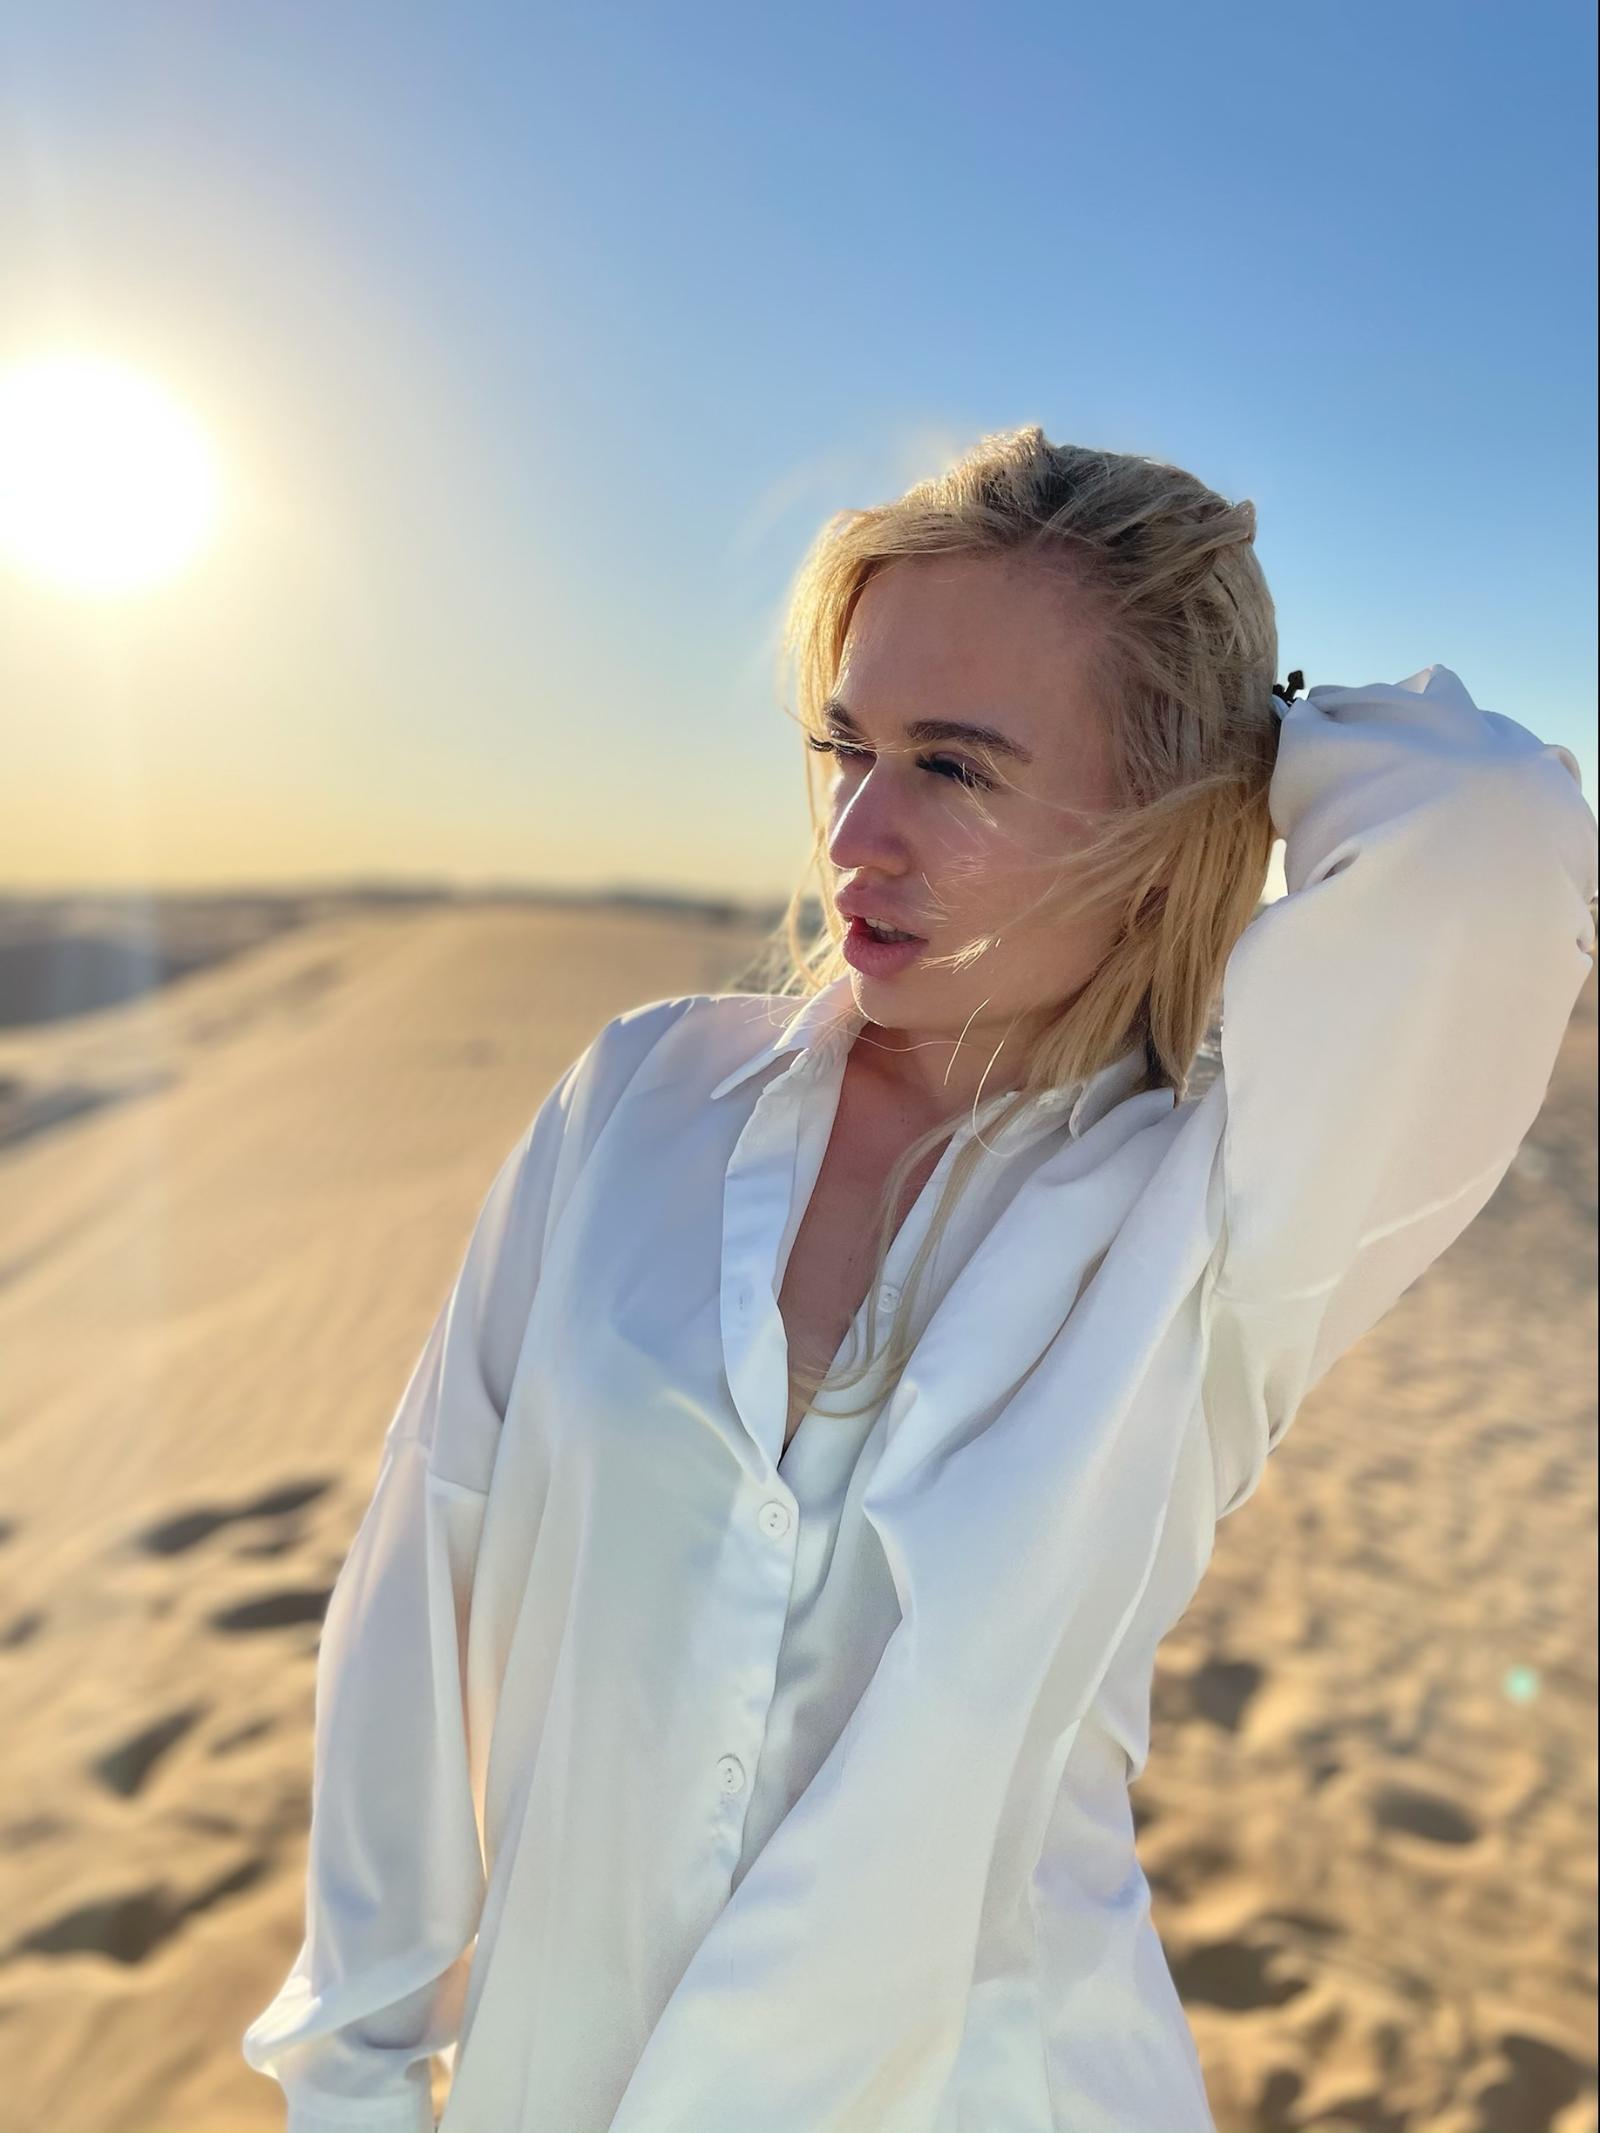 Певица Glavnaya едва не замерзла в пустыне